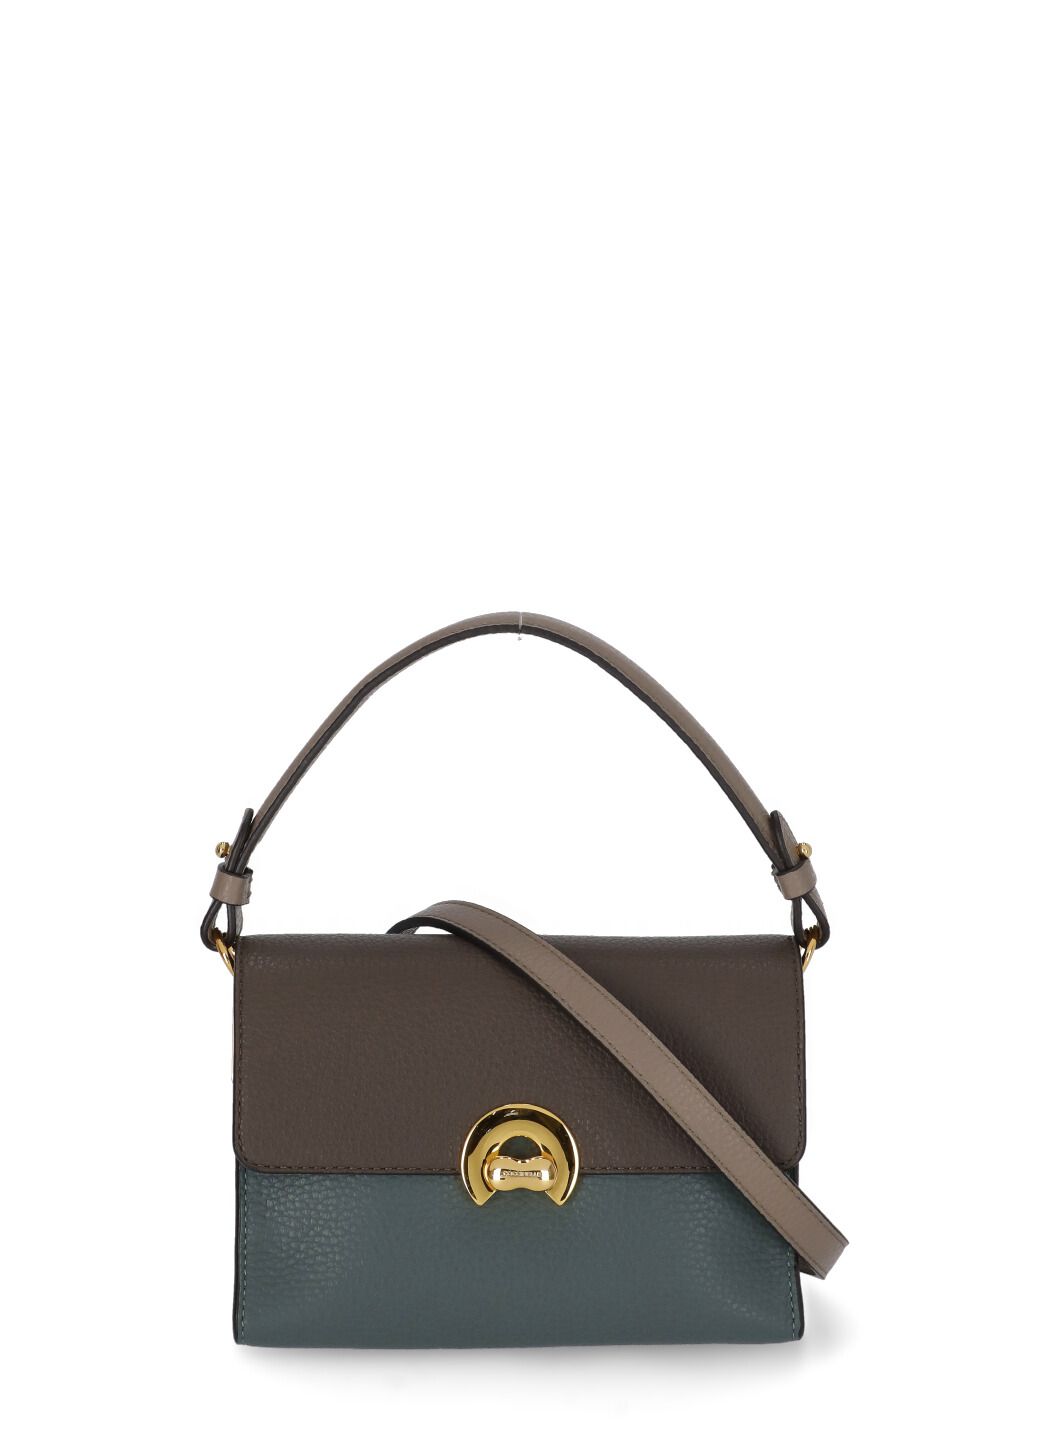 Binxie Tricolor Small handbag